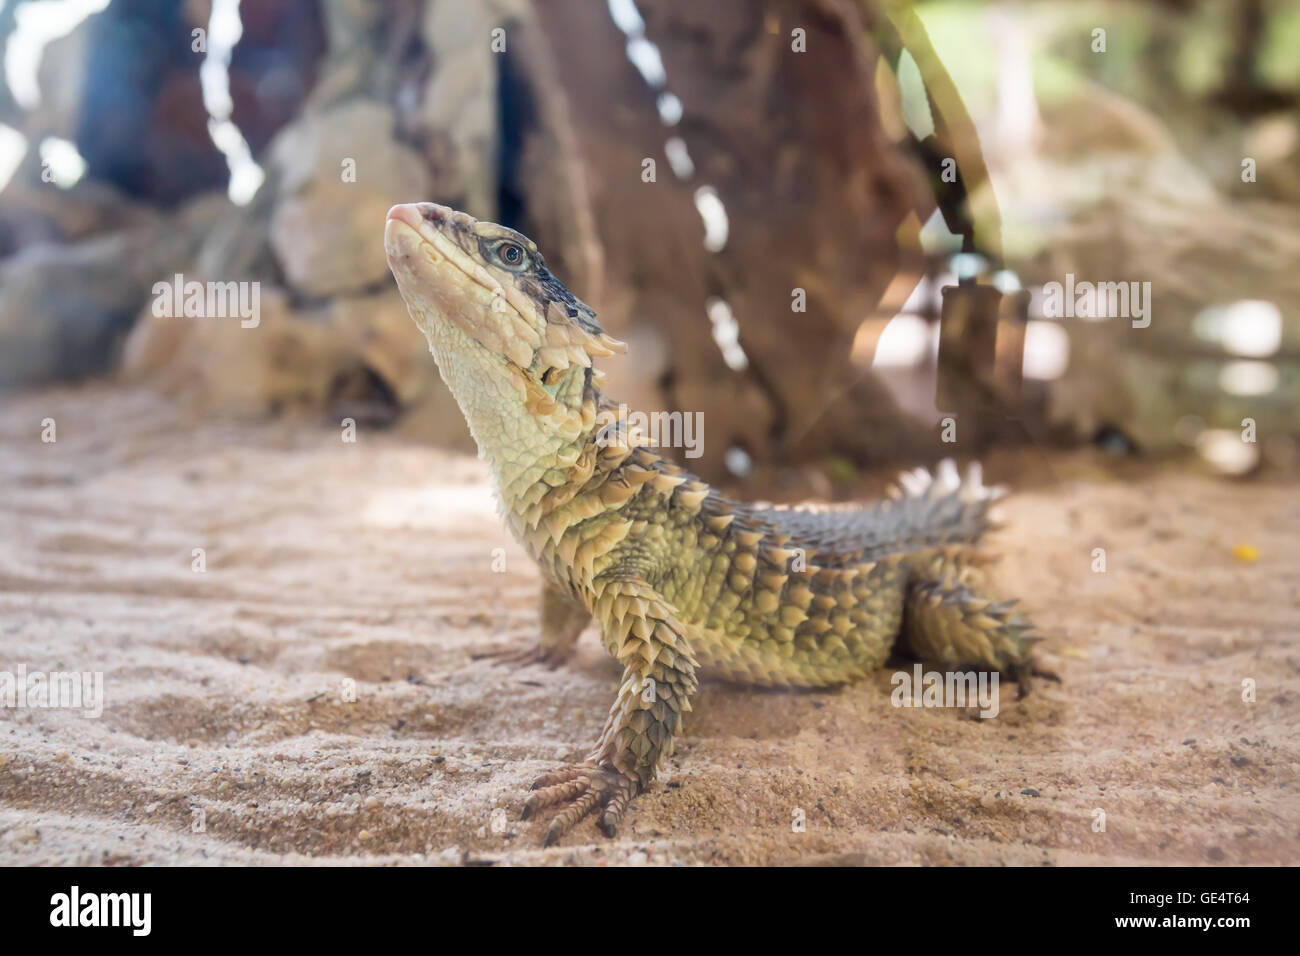 Close-up of a Sungazer, Giant girdled lizard Stock Photo